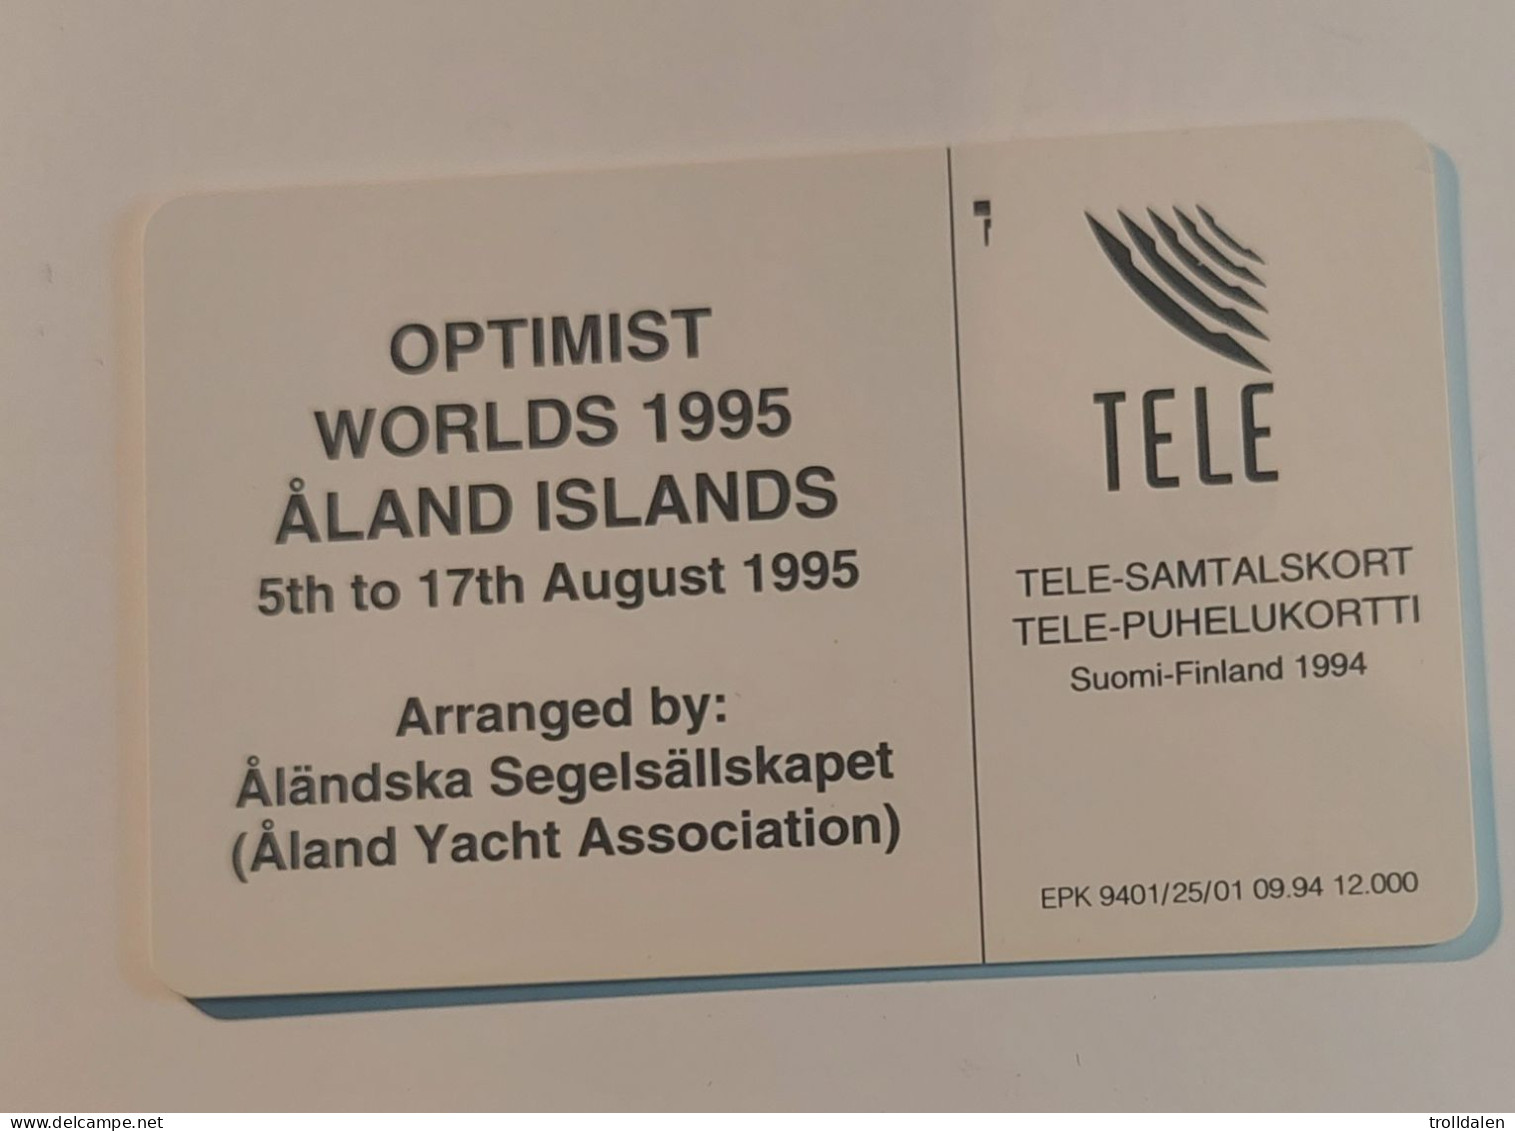 Optimist Worlds 1995 - Aland